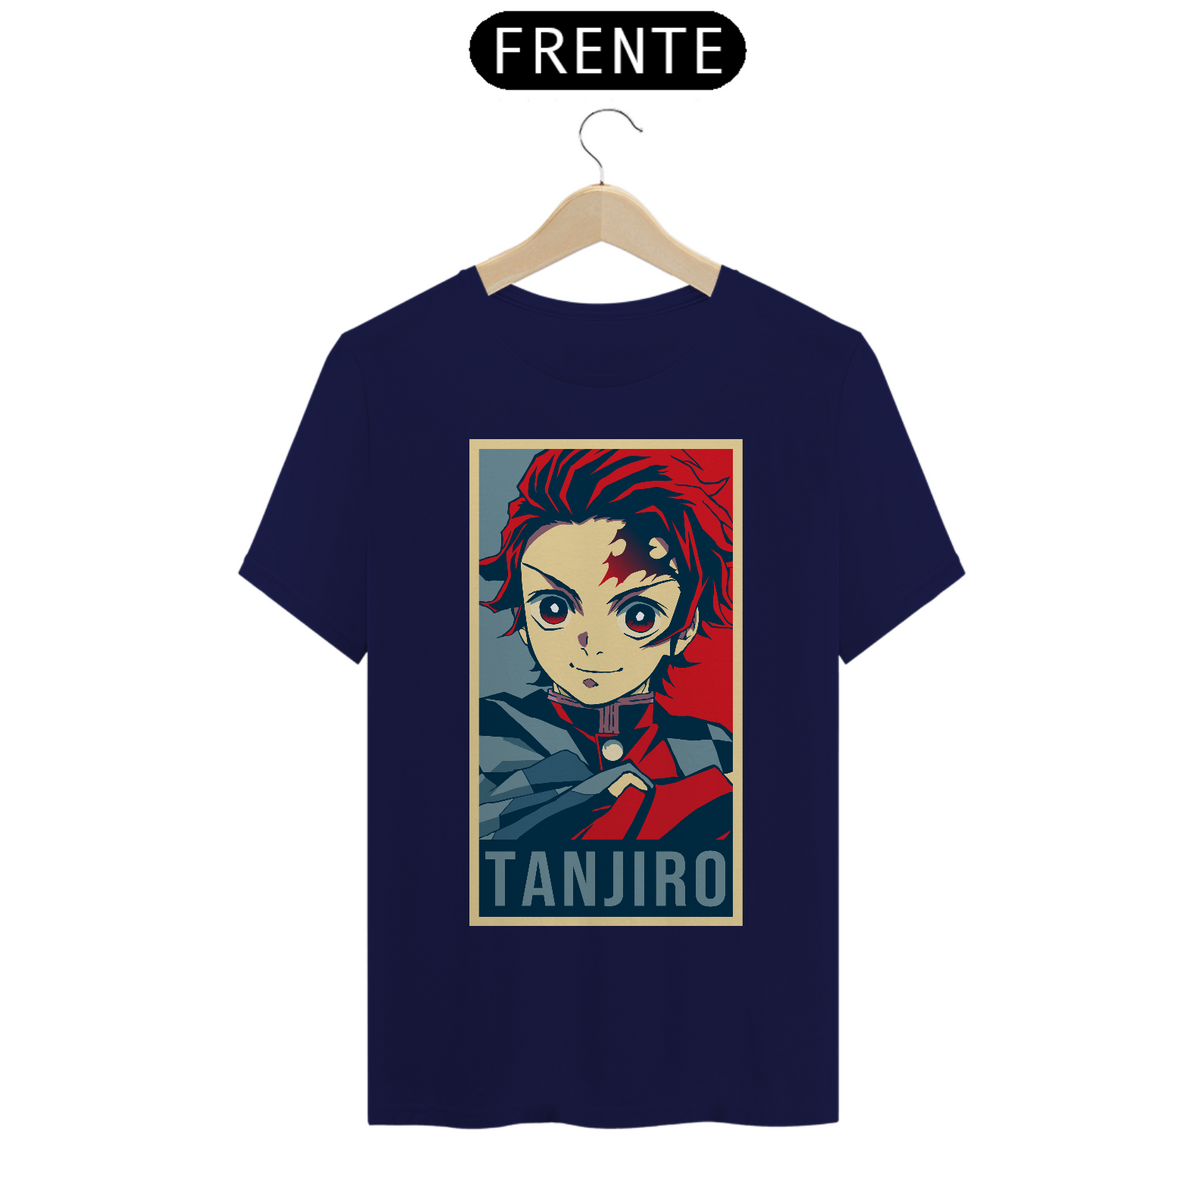 Nome do produto: Camiseta Tanjiro